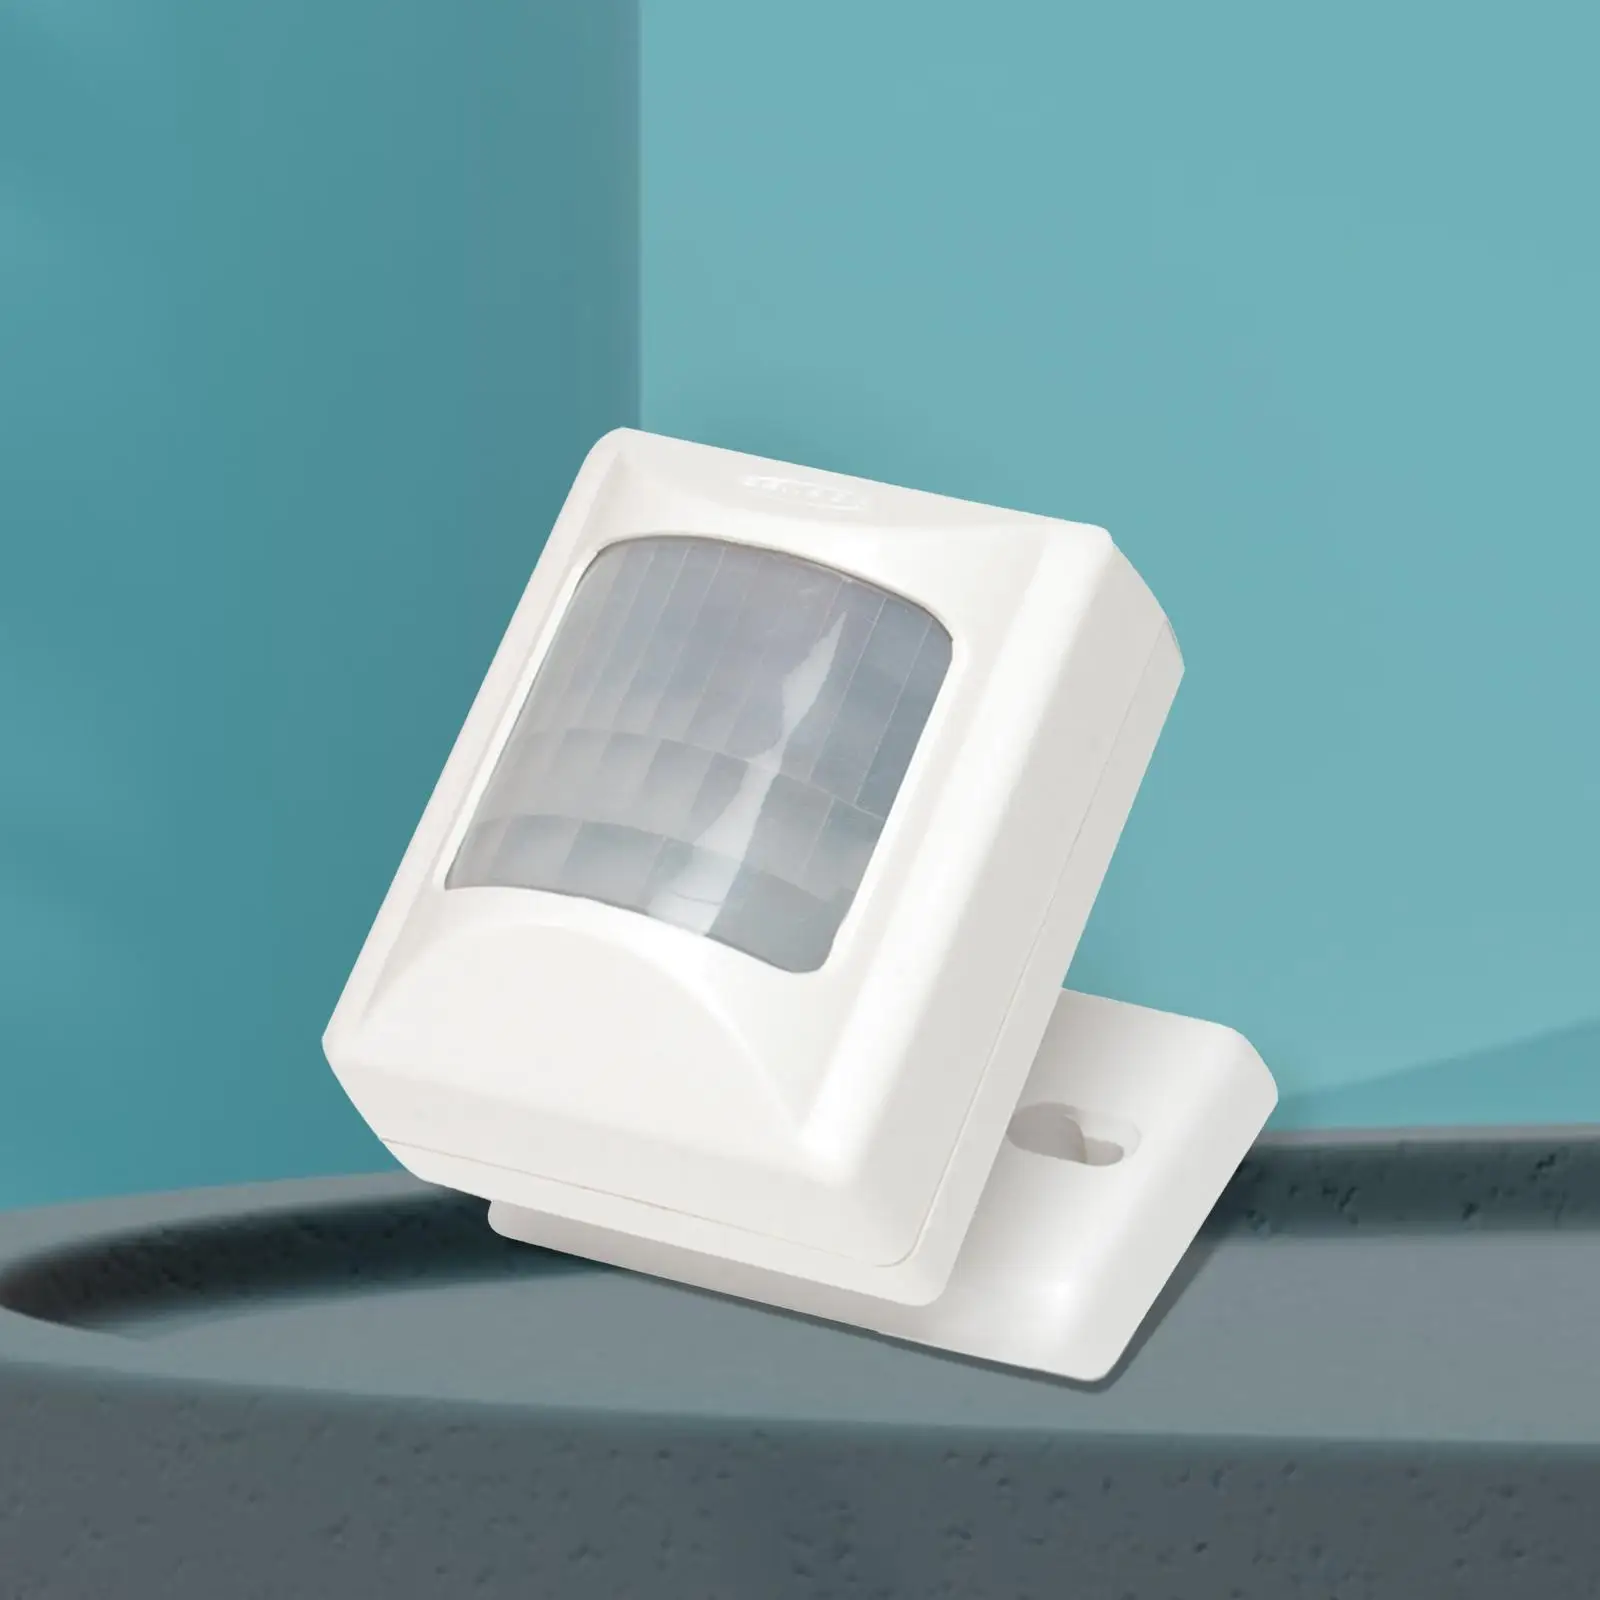 Automatic Electric Urinal Flush Valve Sensor Urinal Accessories Wall Mounted Urinal Sensor Waterproof for Toilet Bathroom